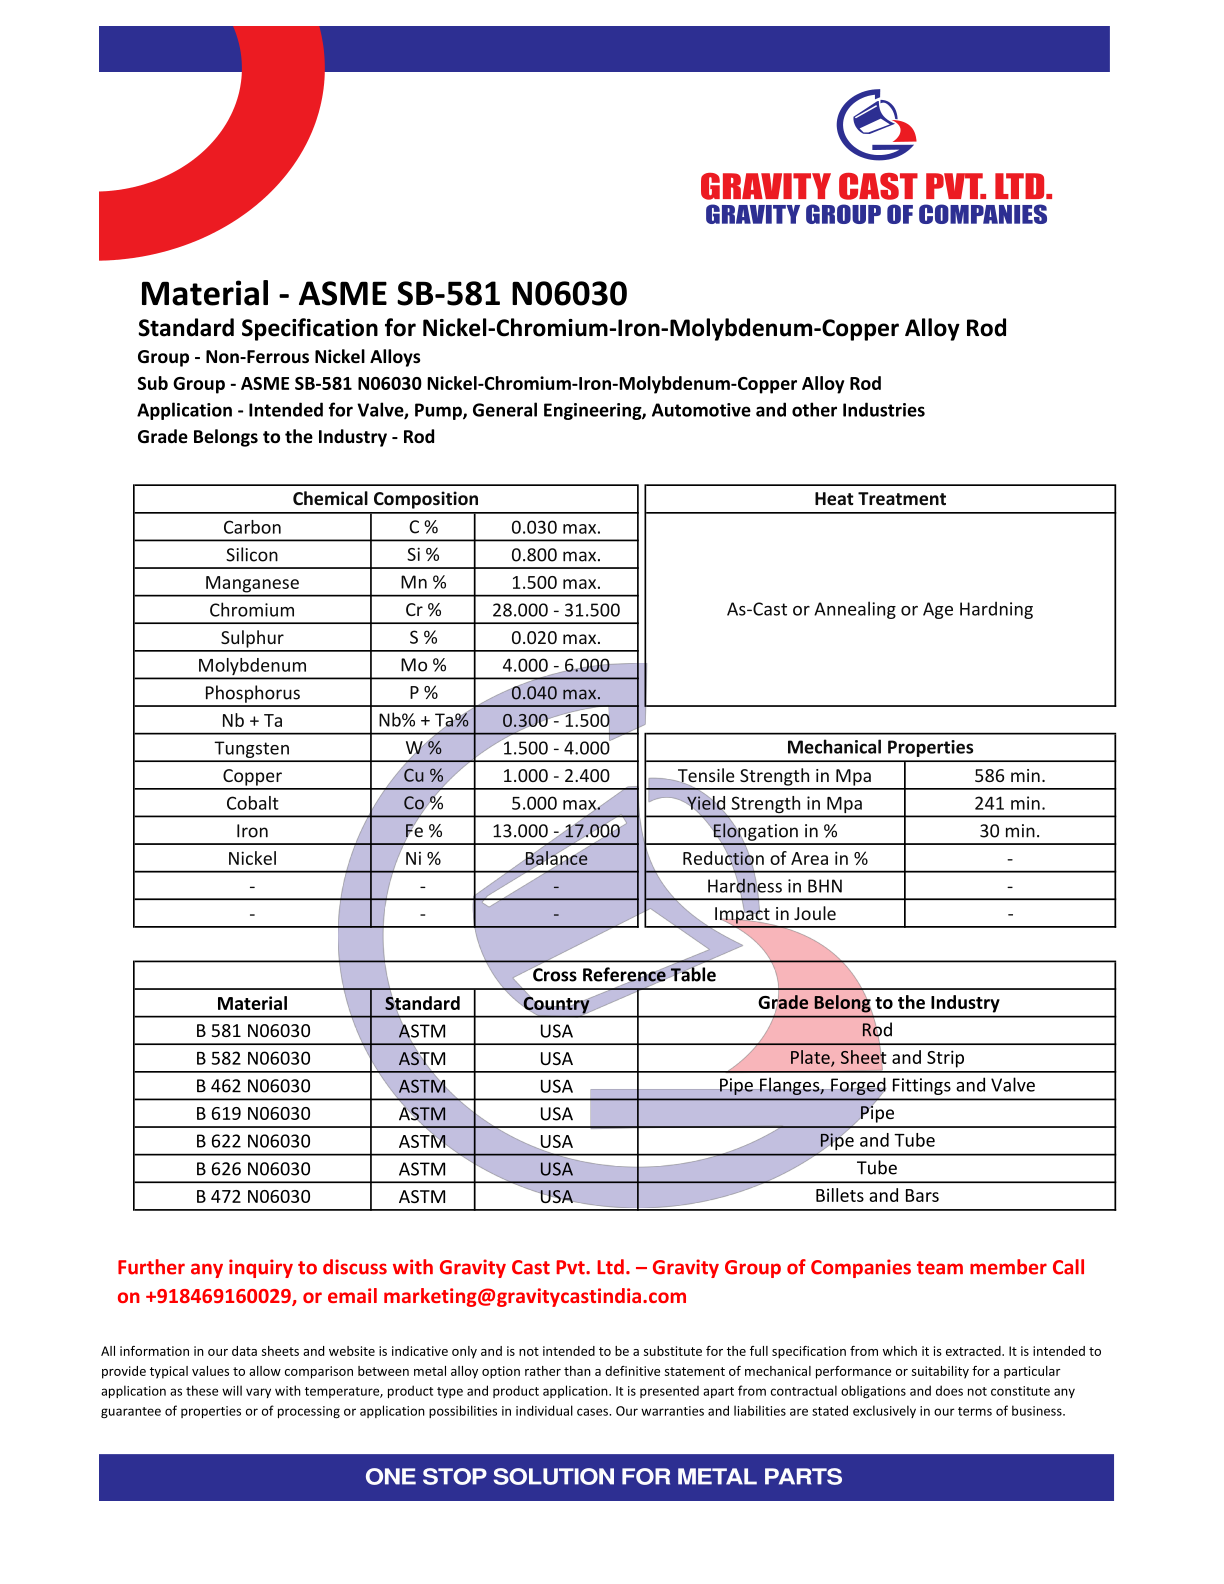 ASME SB-581 N06030.pdf